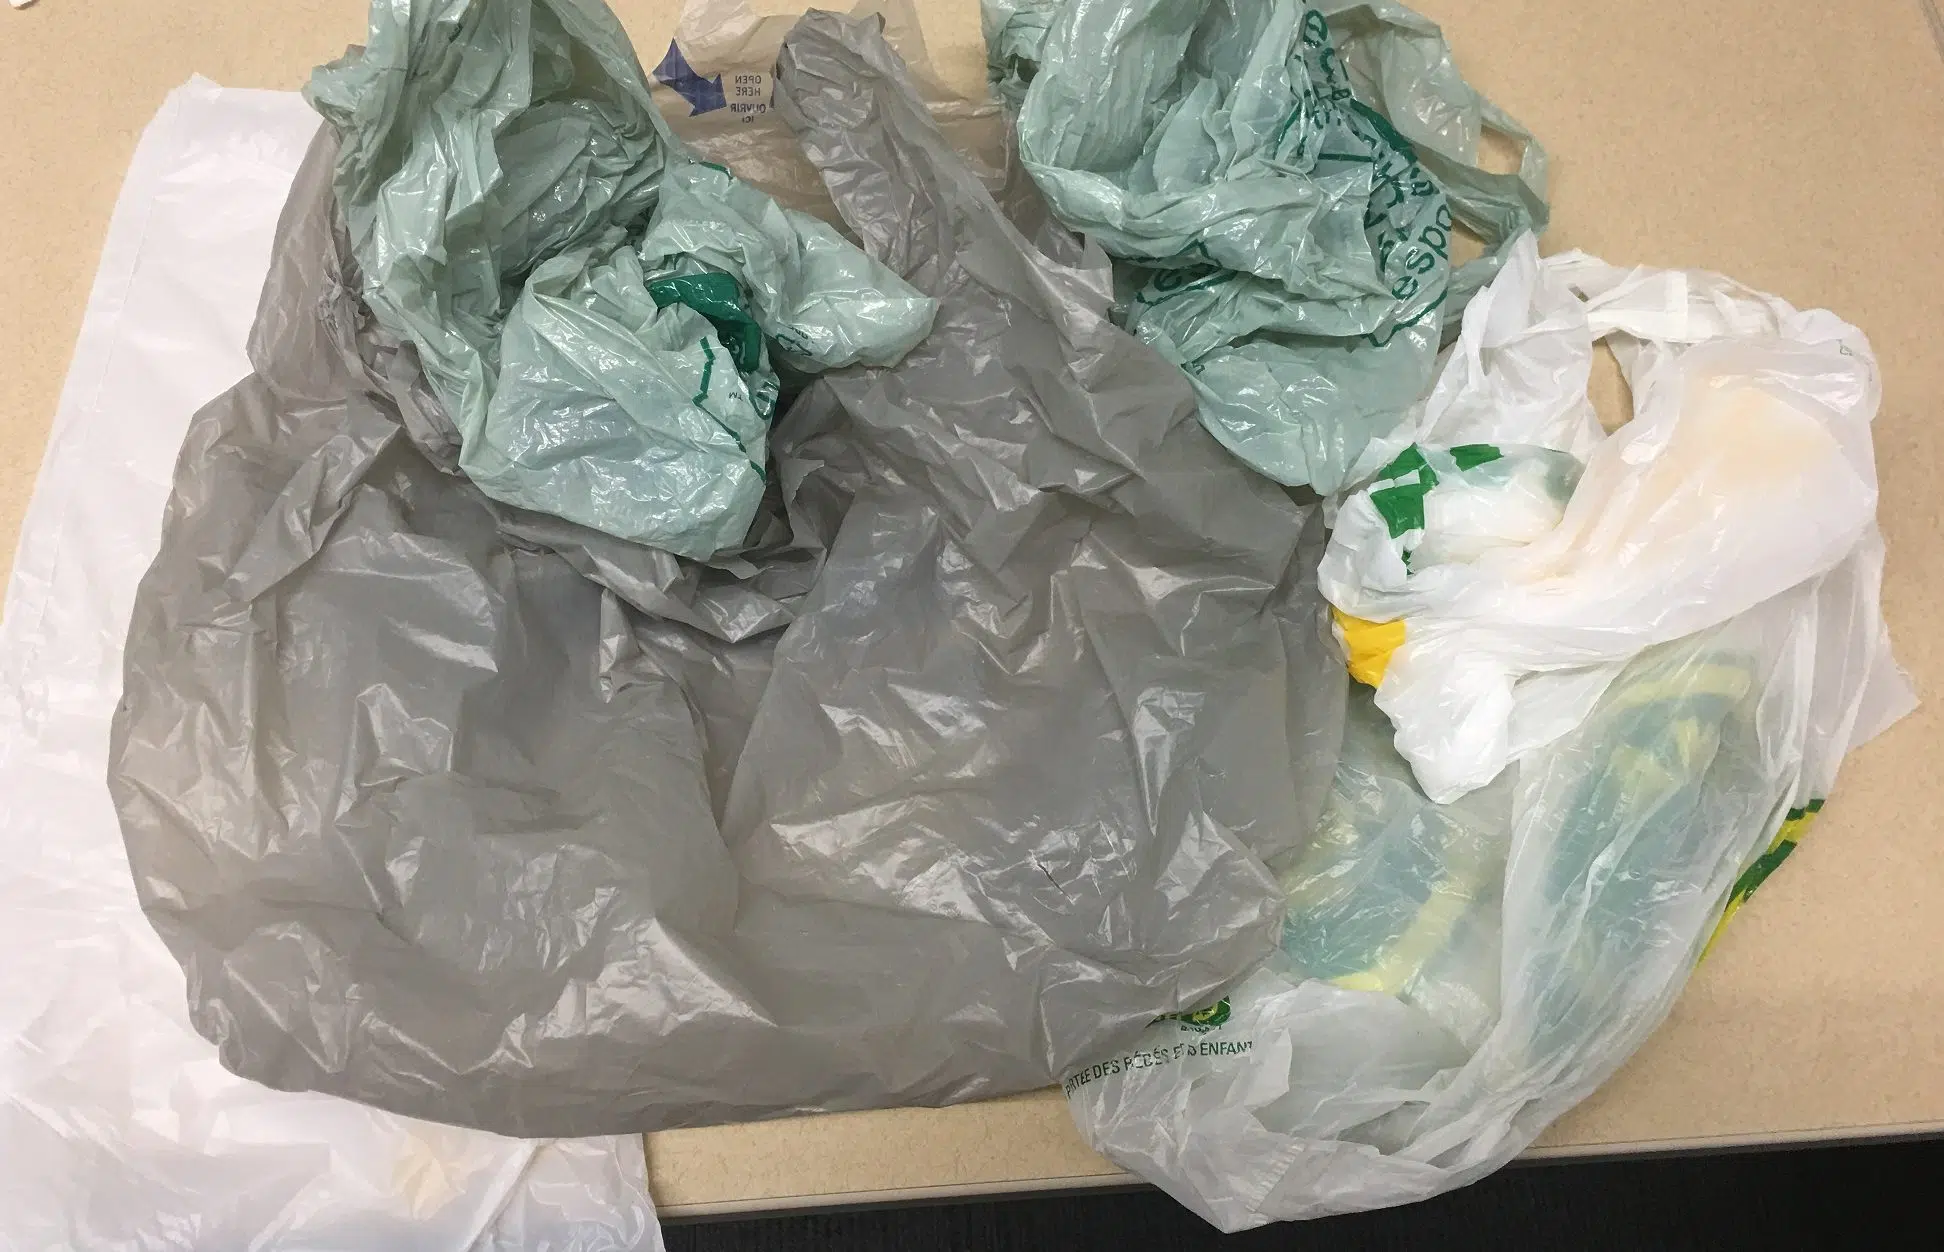 Saint John Region Businesses Support Plastic Bag Ban: Survey